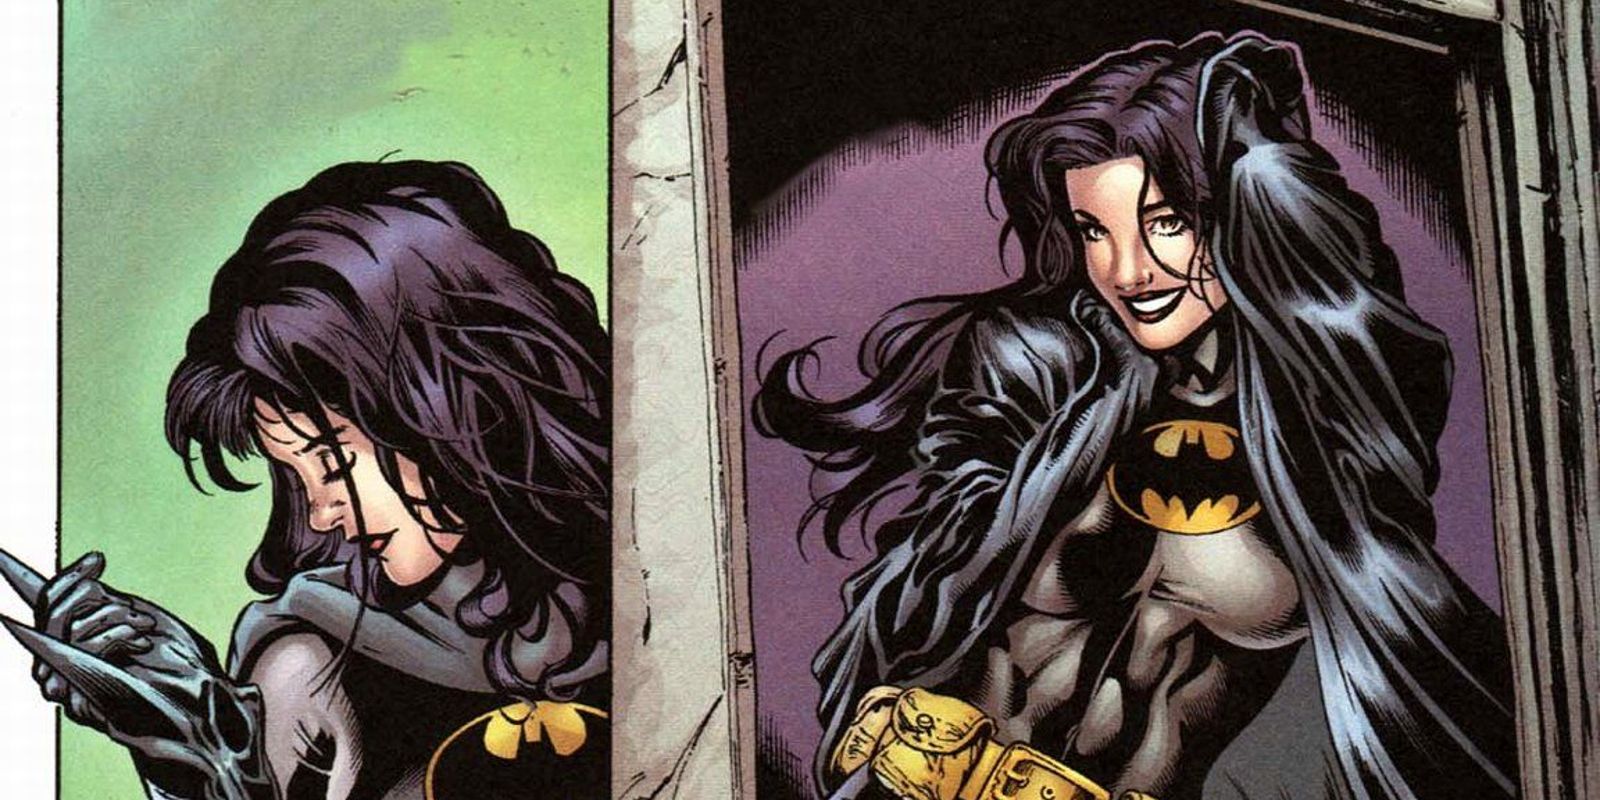 Helena Bertinelli enjoying her time in the Batgirl suit in DC comics